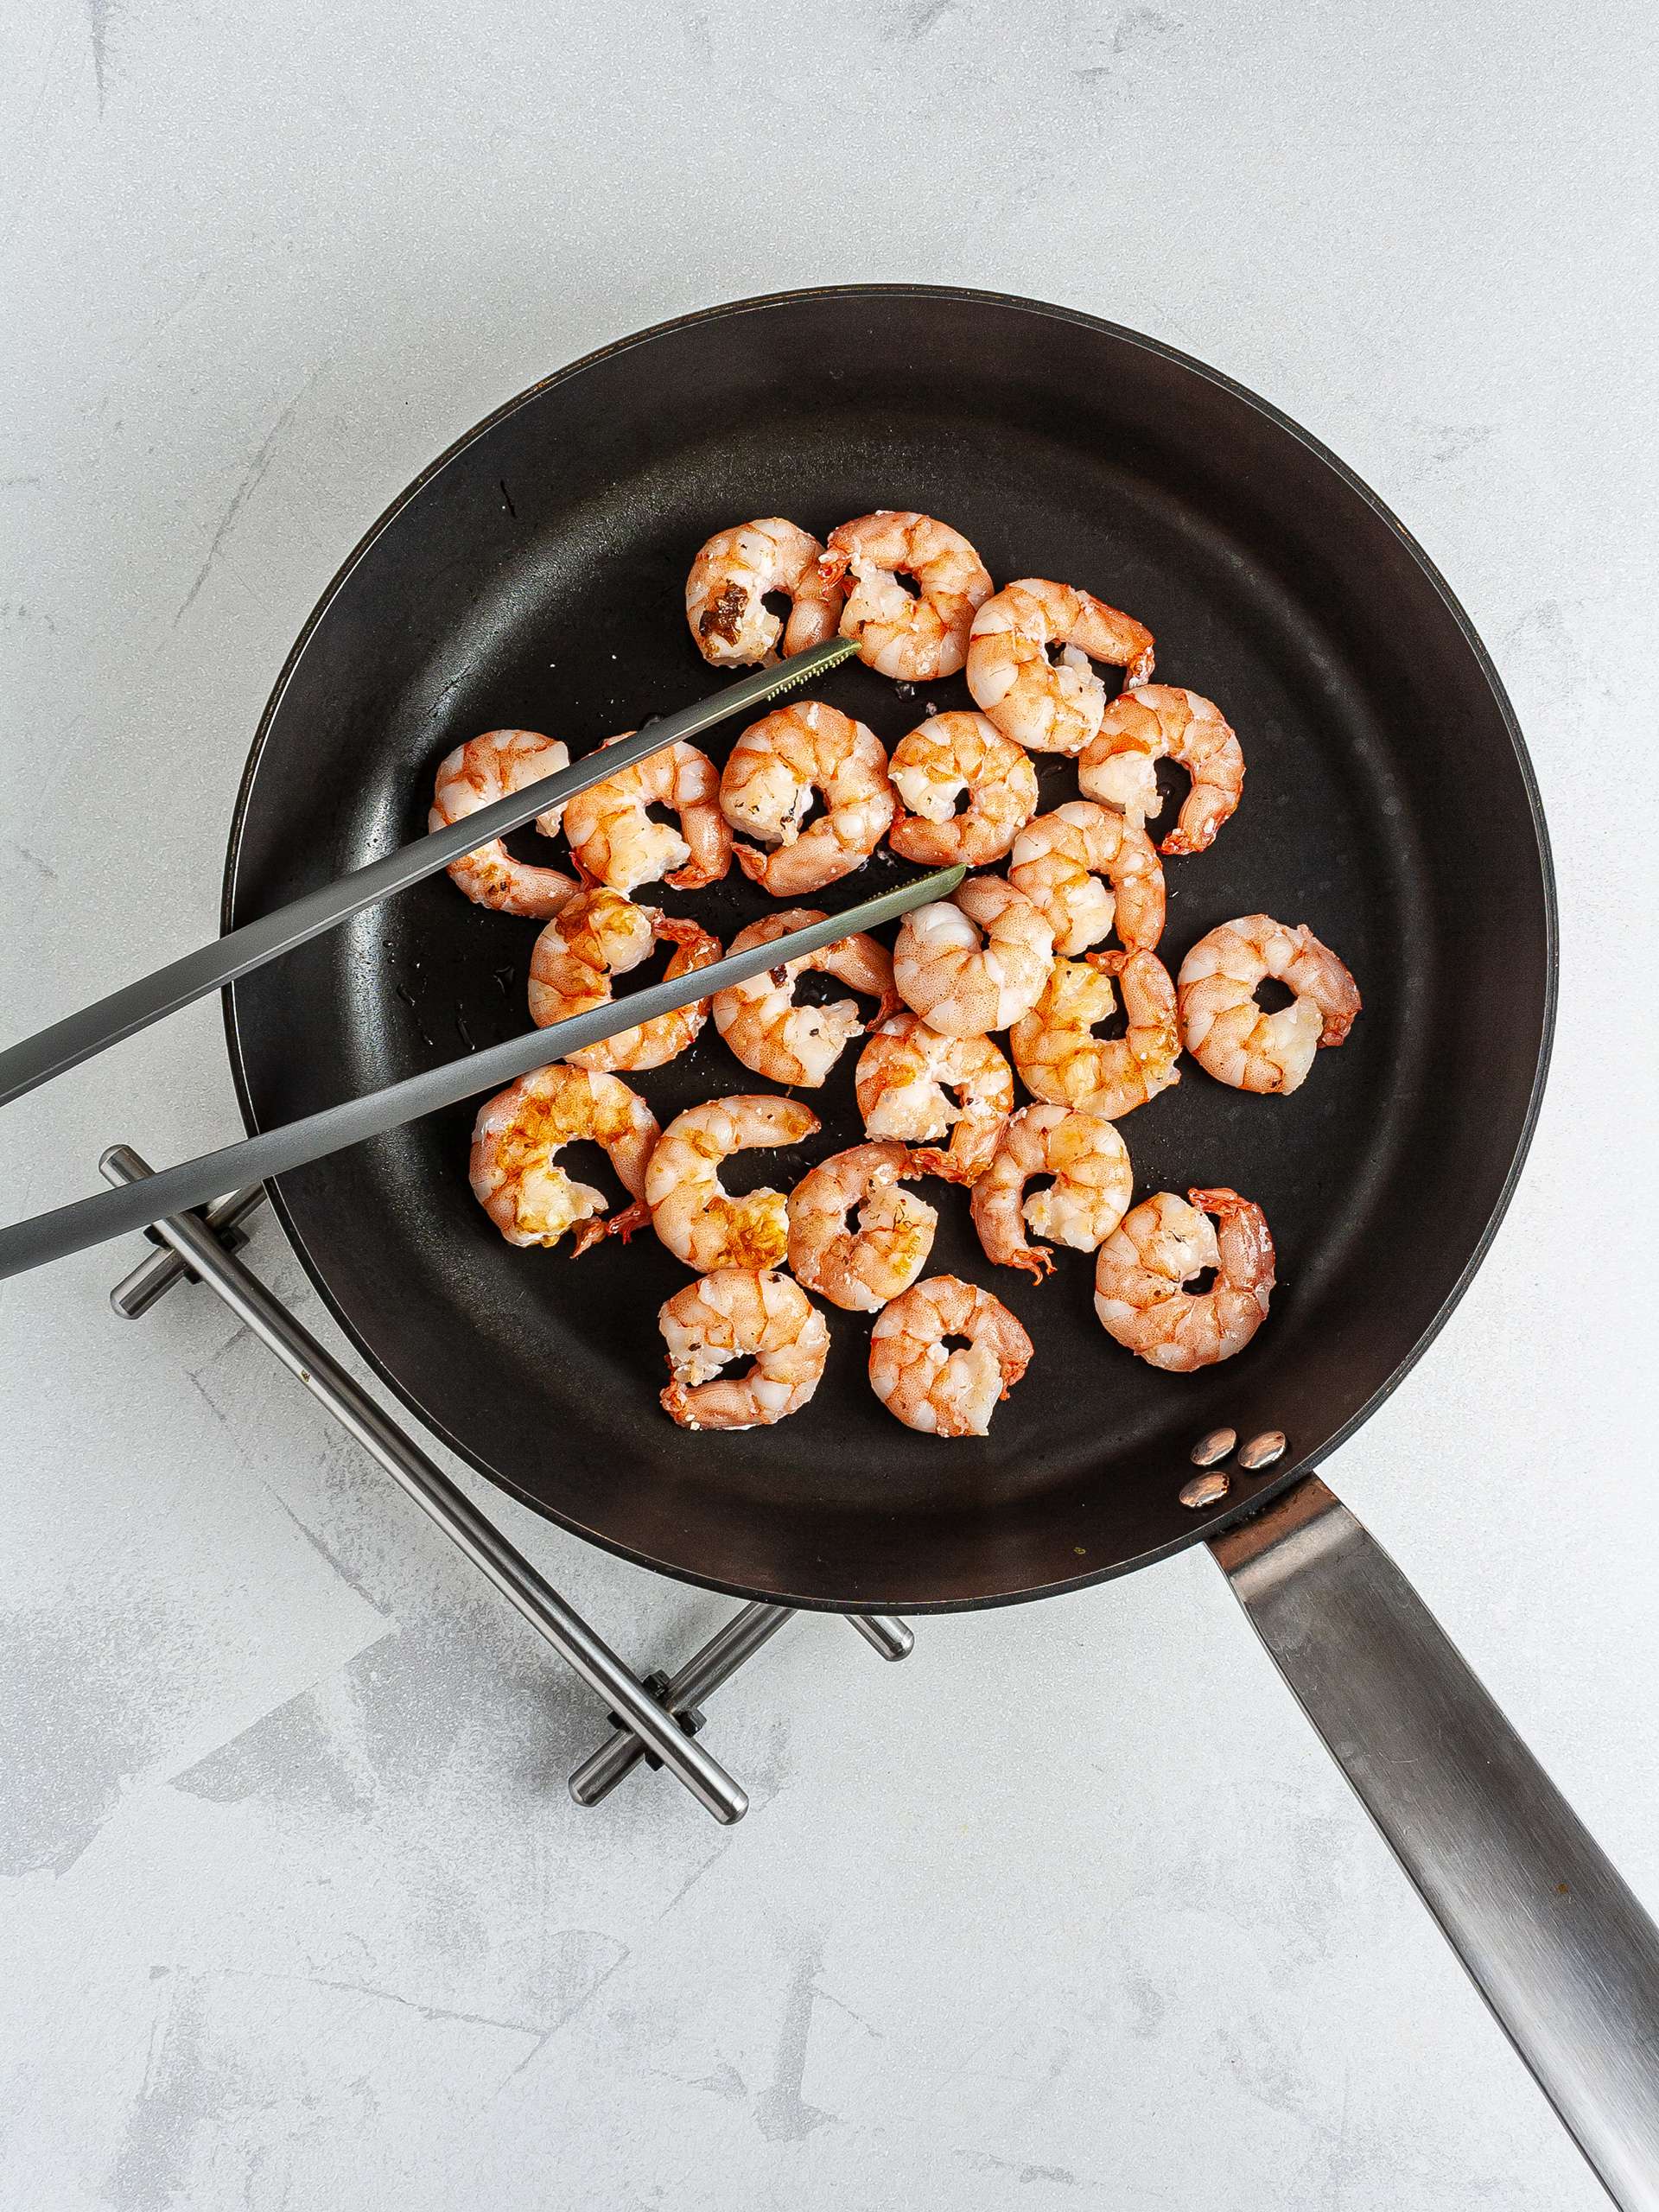 Pan-fried shrimps